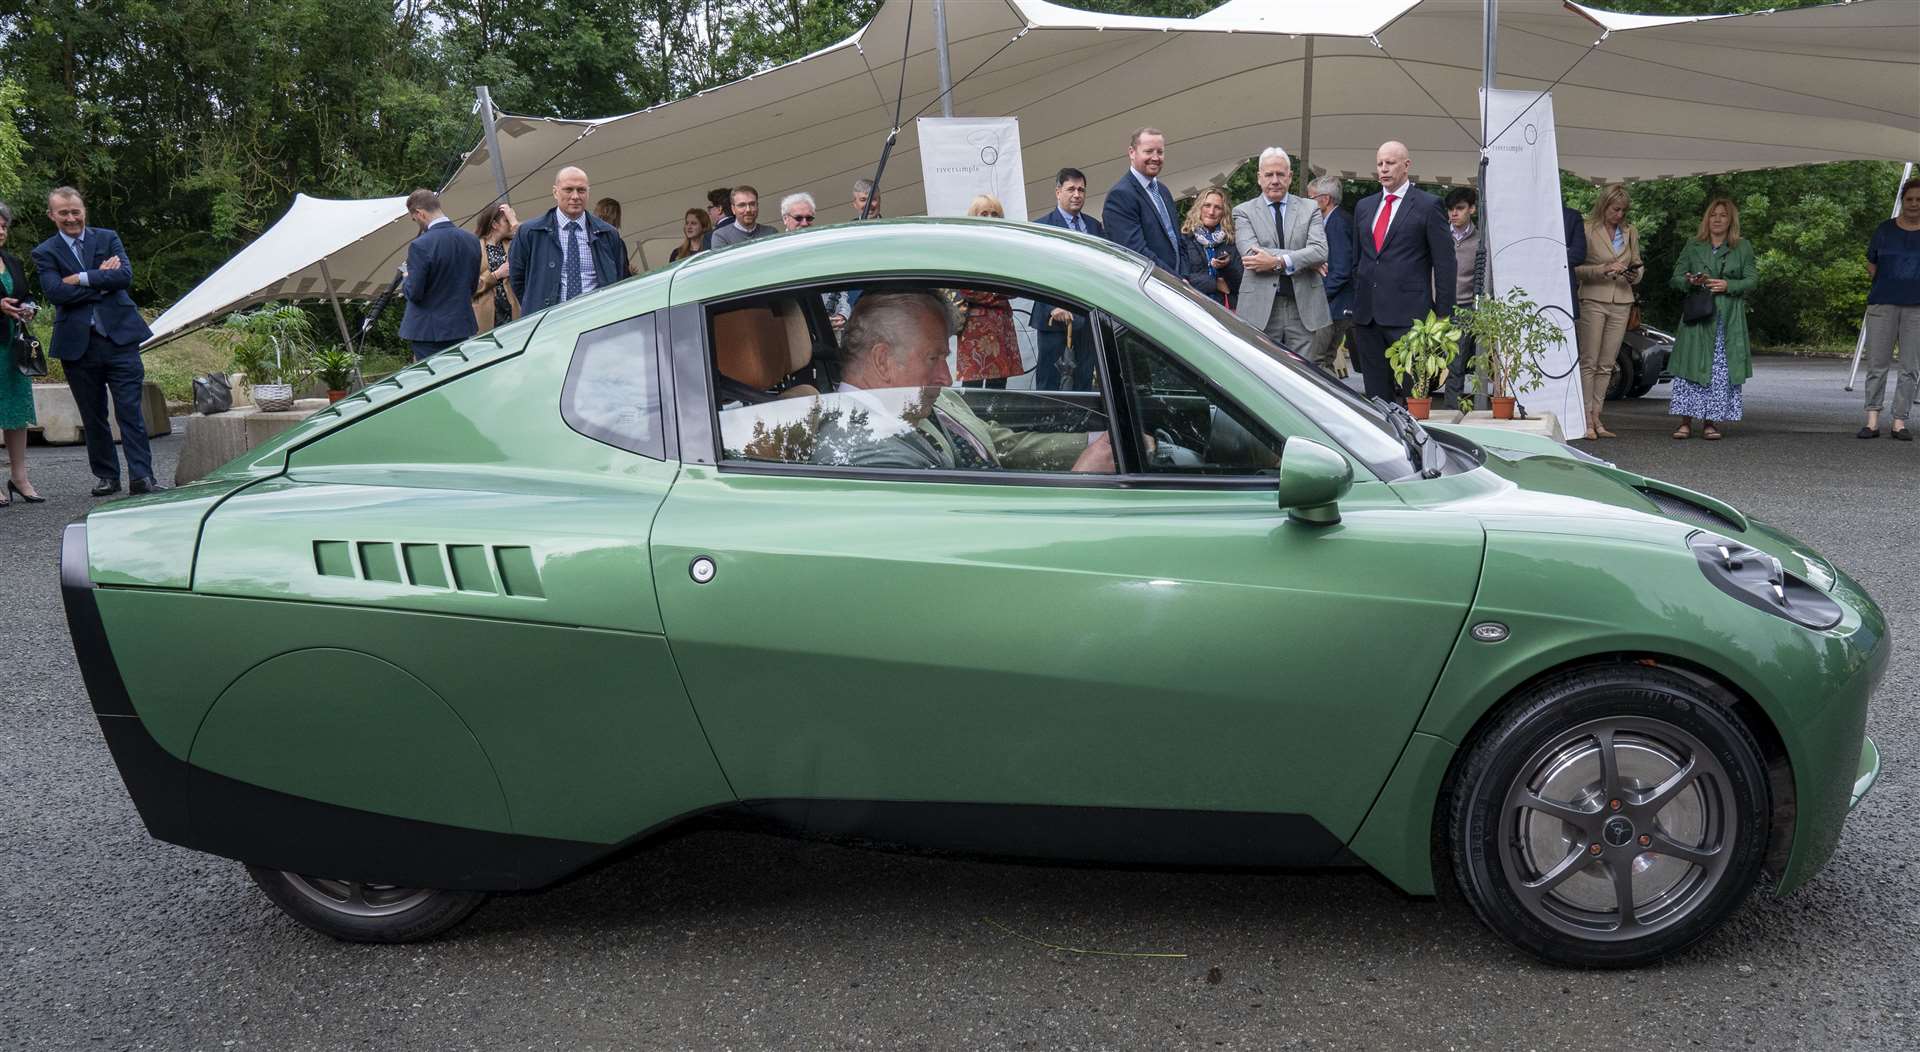 Charles test drives a Rasa hydrogen-powered car (PA)